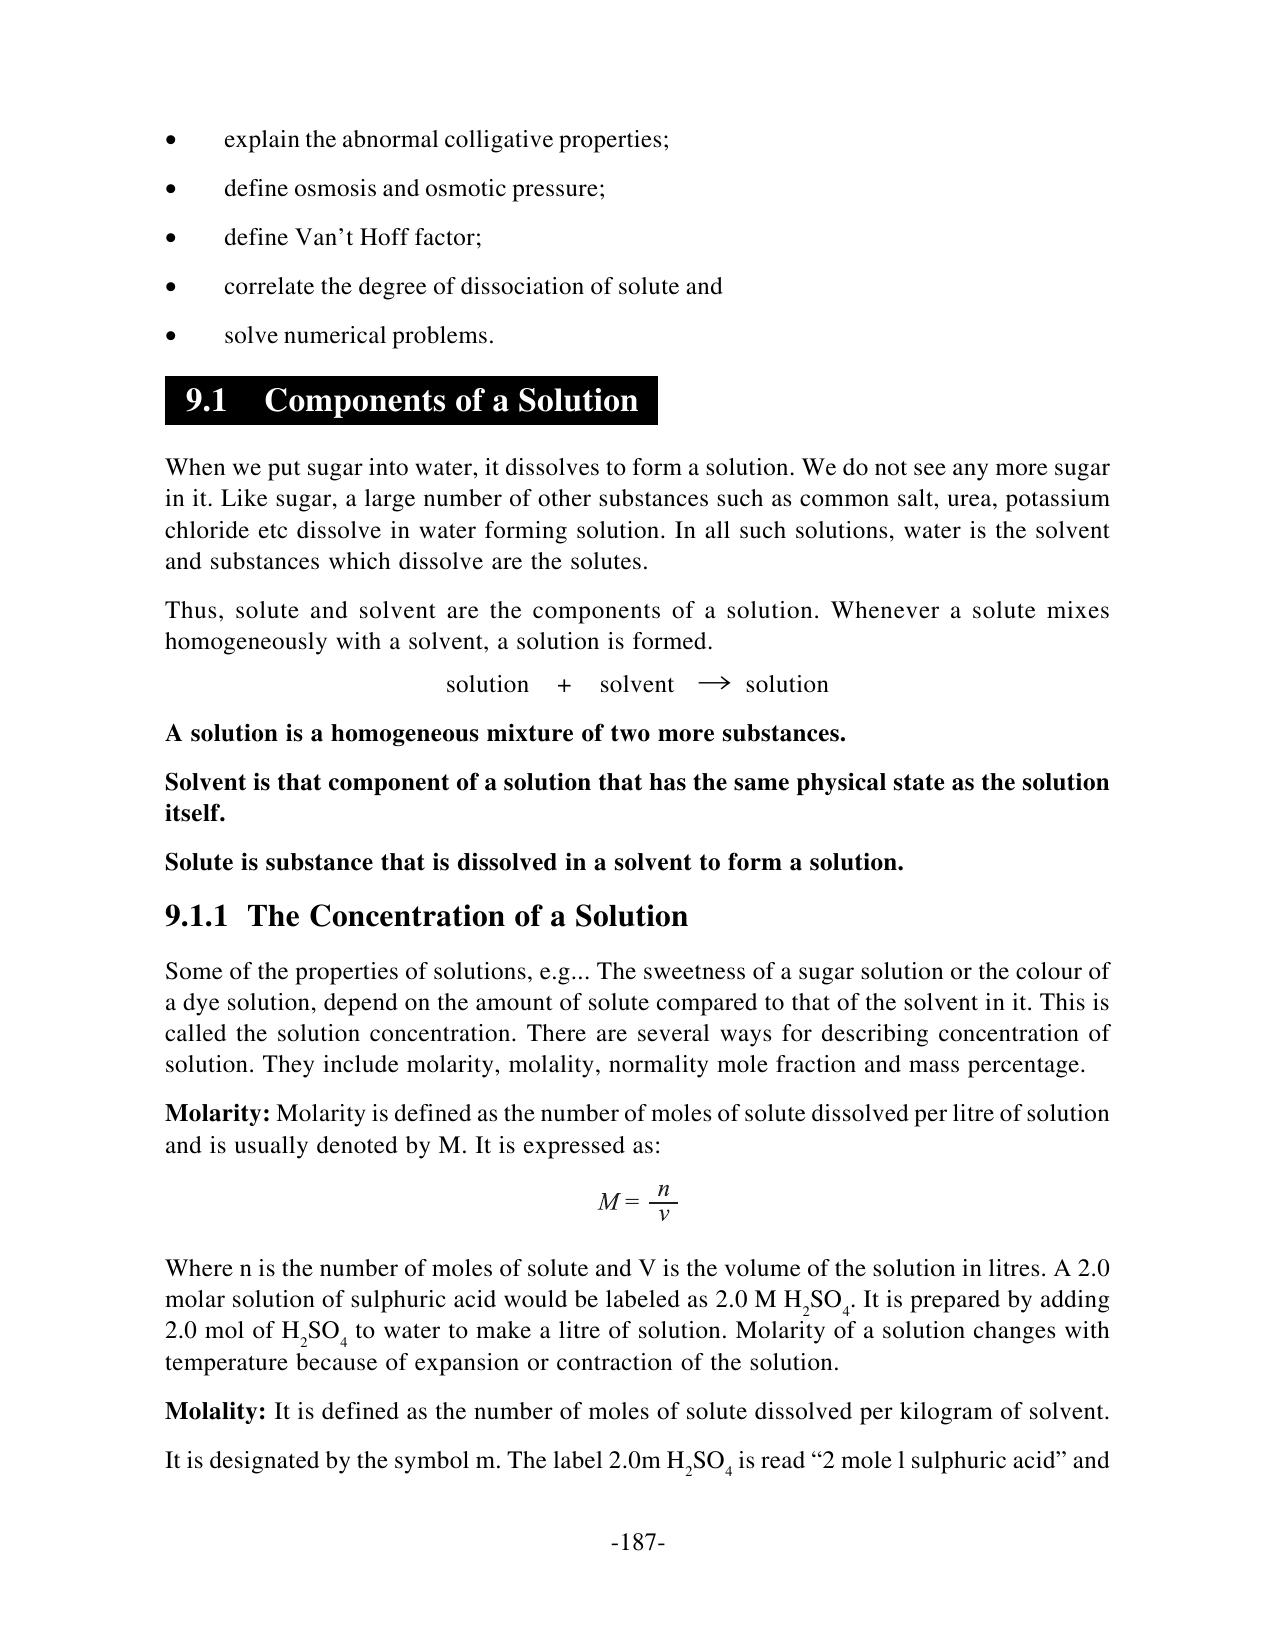 TS SCERT Inter 1st Year Chemistry Vol – I Path 1 (English Medium) Text Book - Page 196